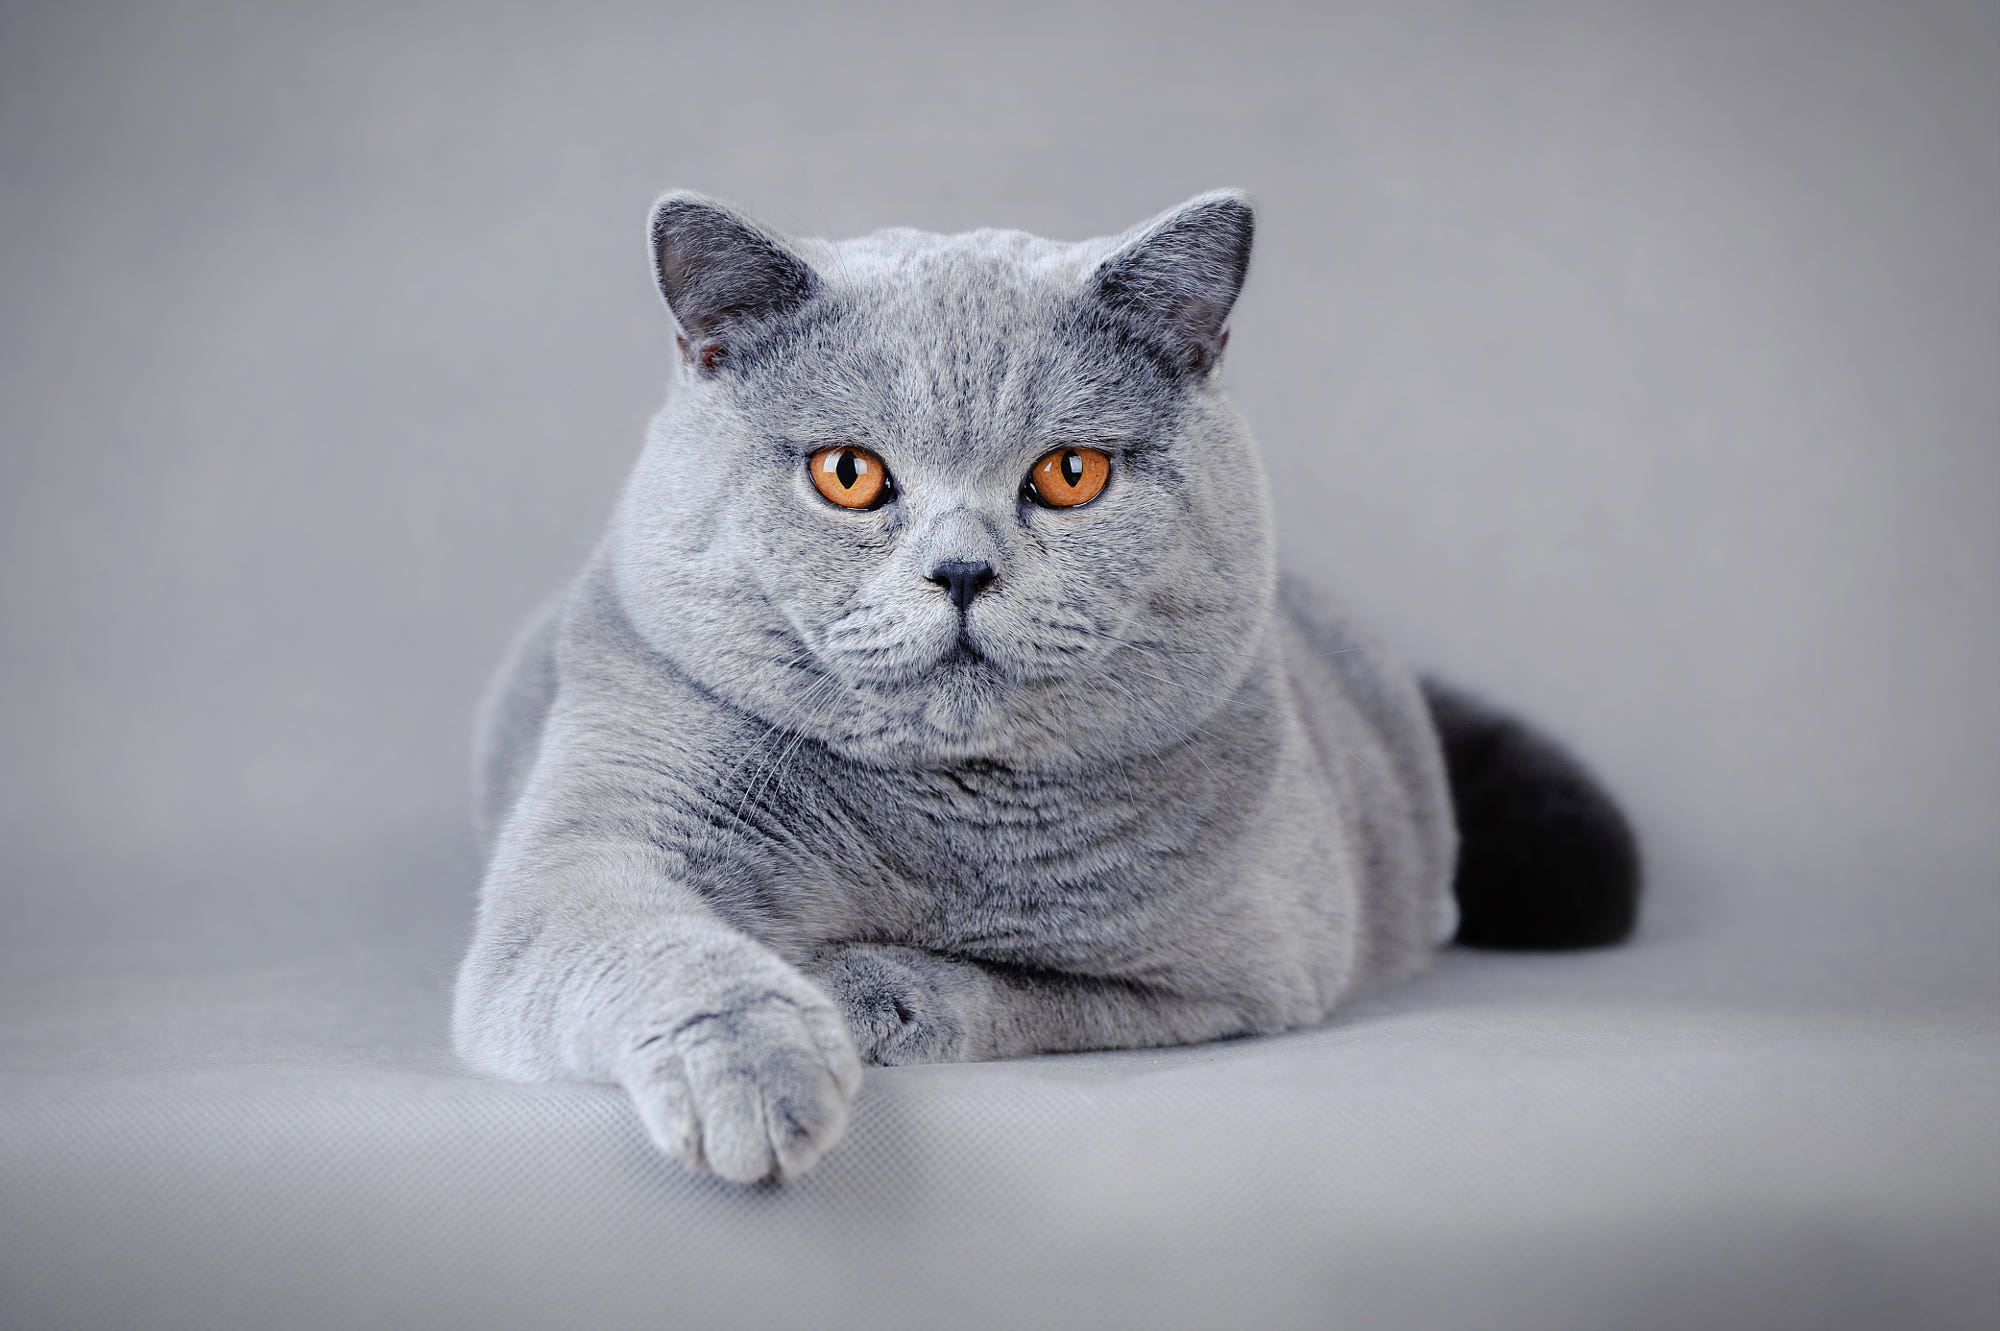 Британская. Британский короткошерстный кот. Британская короткошёрстная кошка голубая. Порода Бритиш Шортхэйр. British Shorthair кошка.